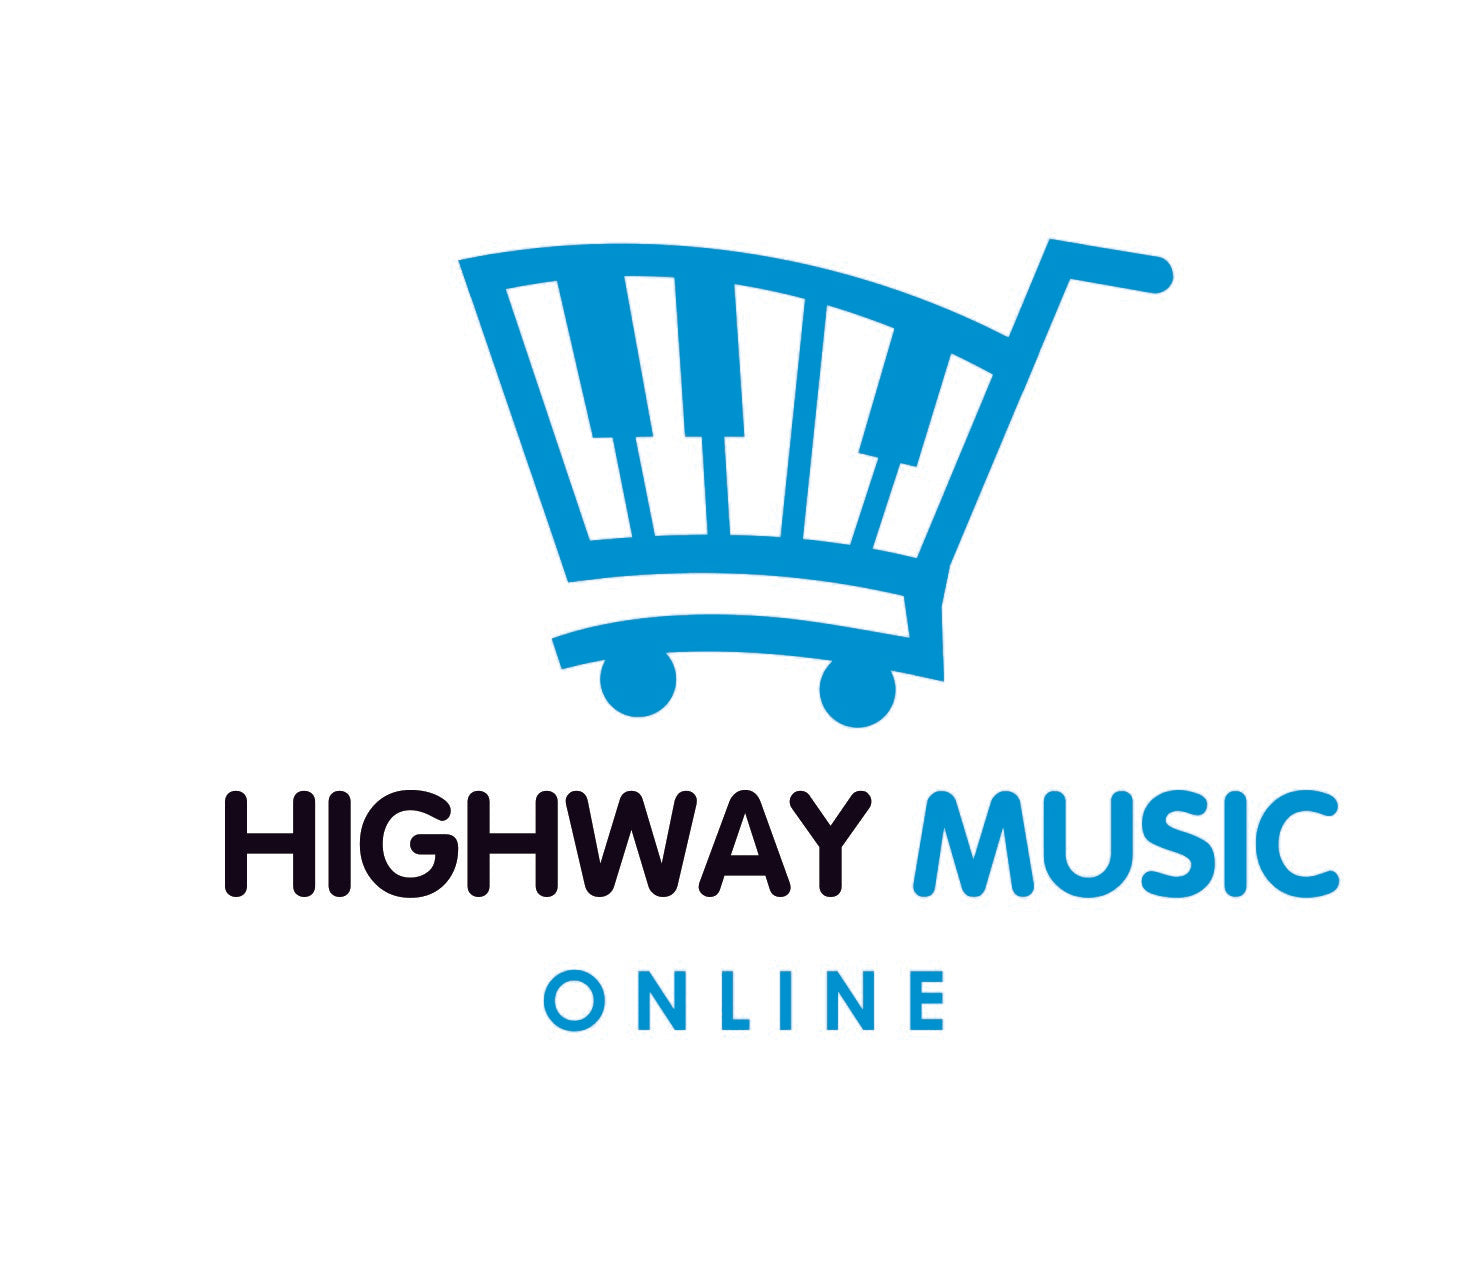 Highway Music Online